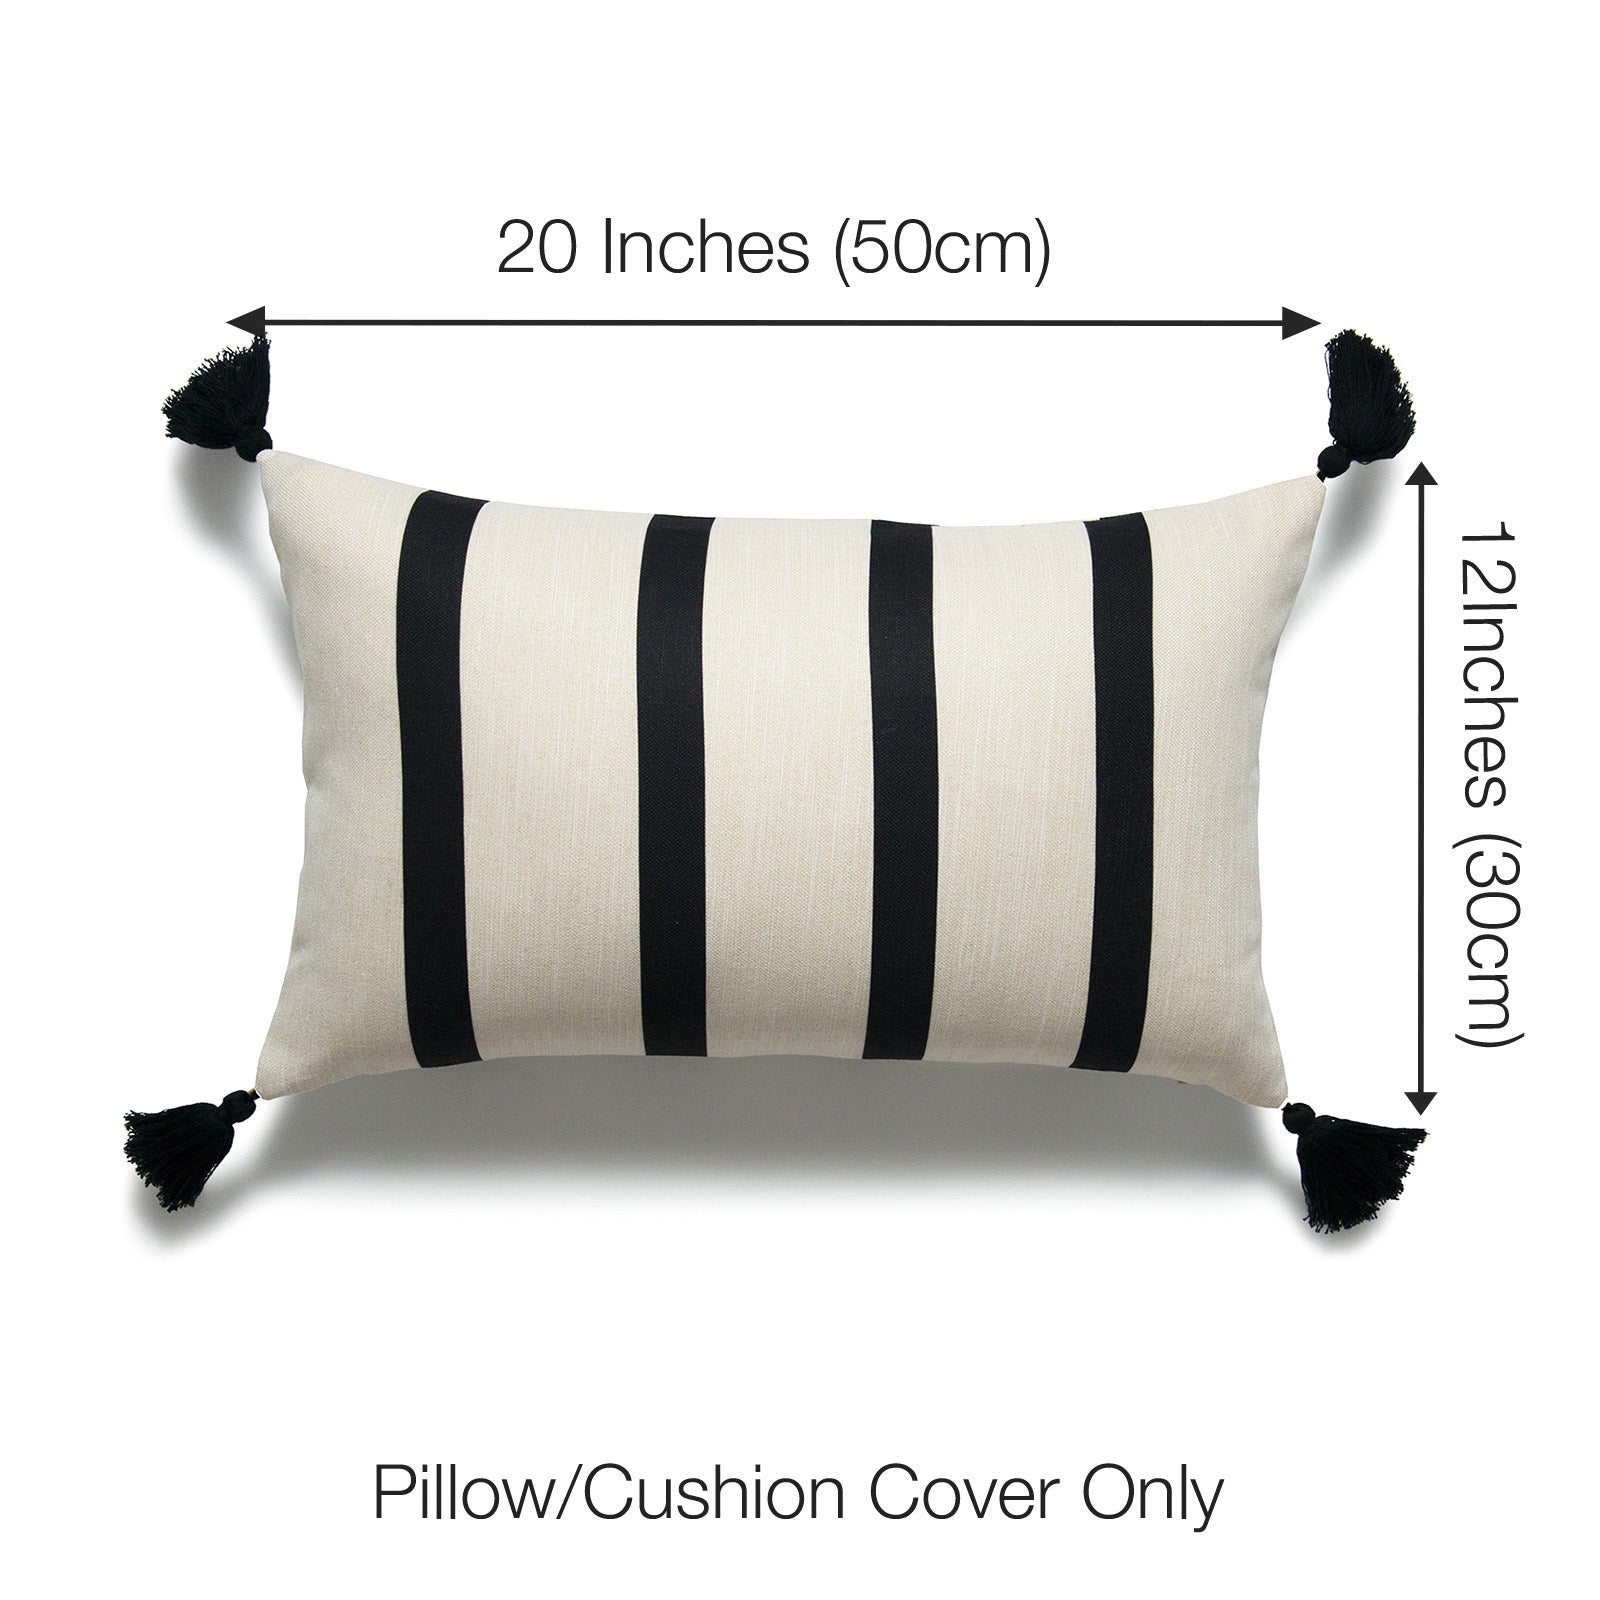 Moroccan Tassel Neutral Lumbar Pillow Cover, Striped, Beige Black, 12"x20"